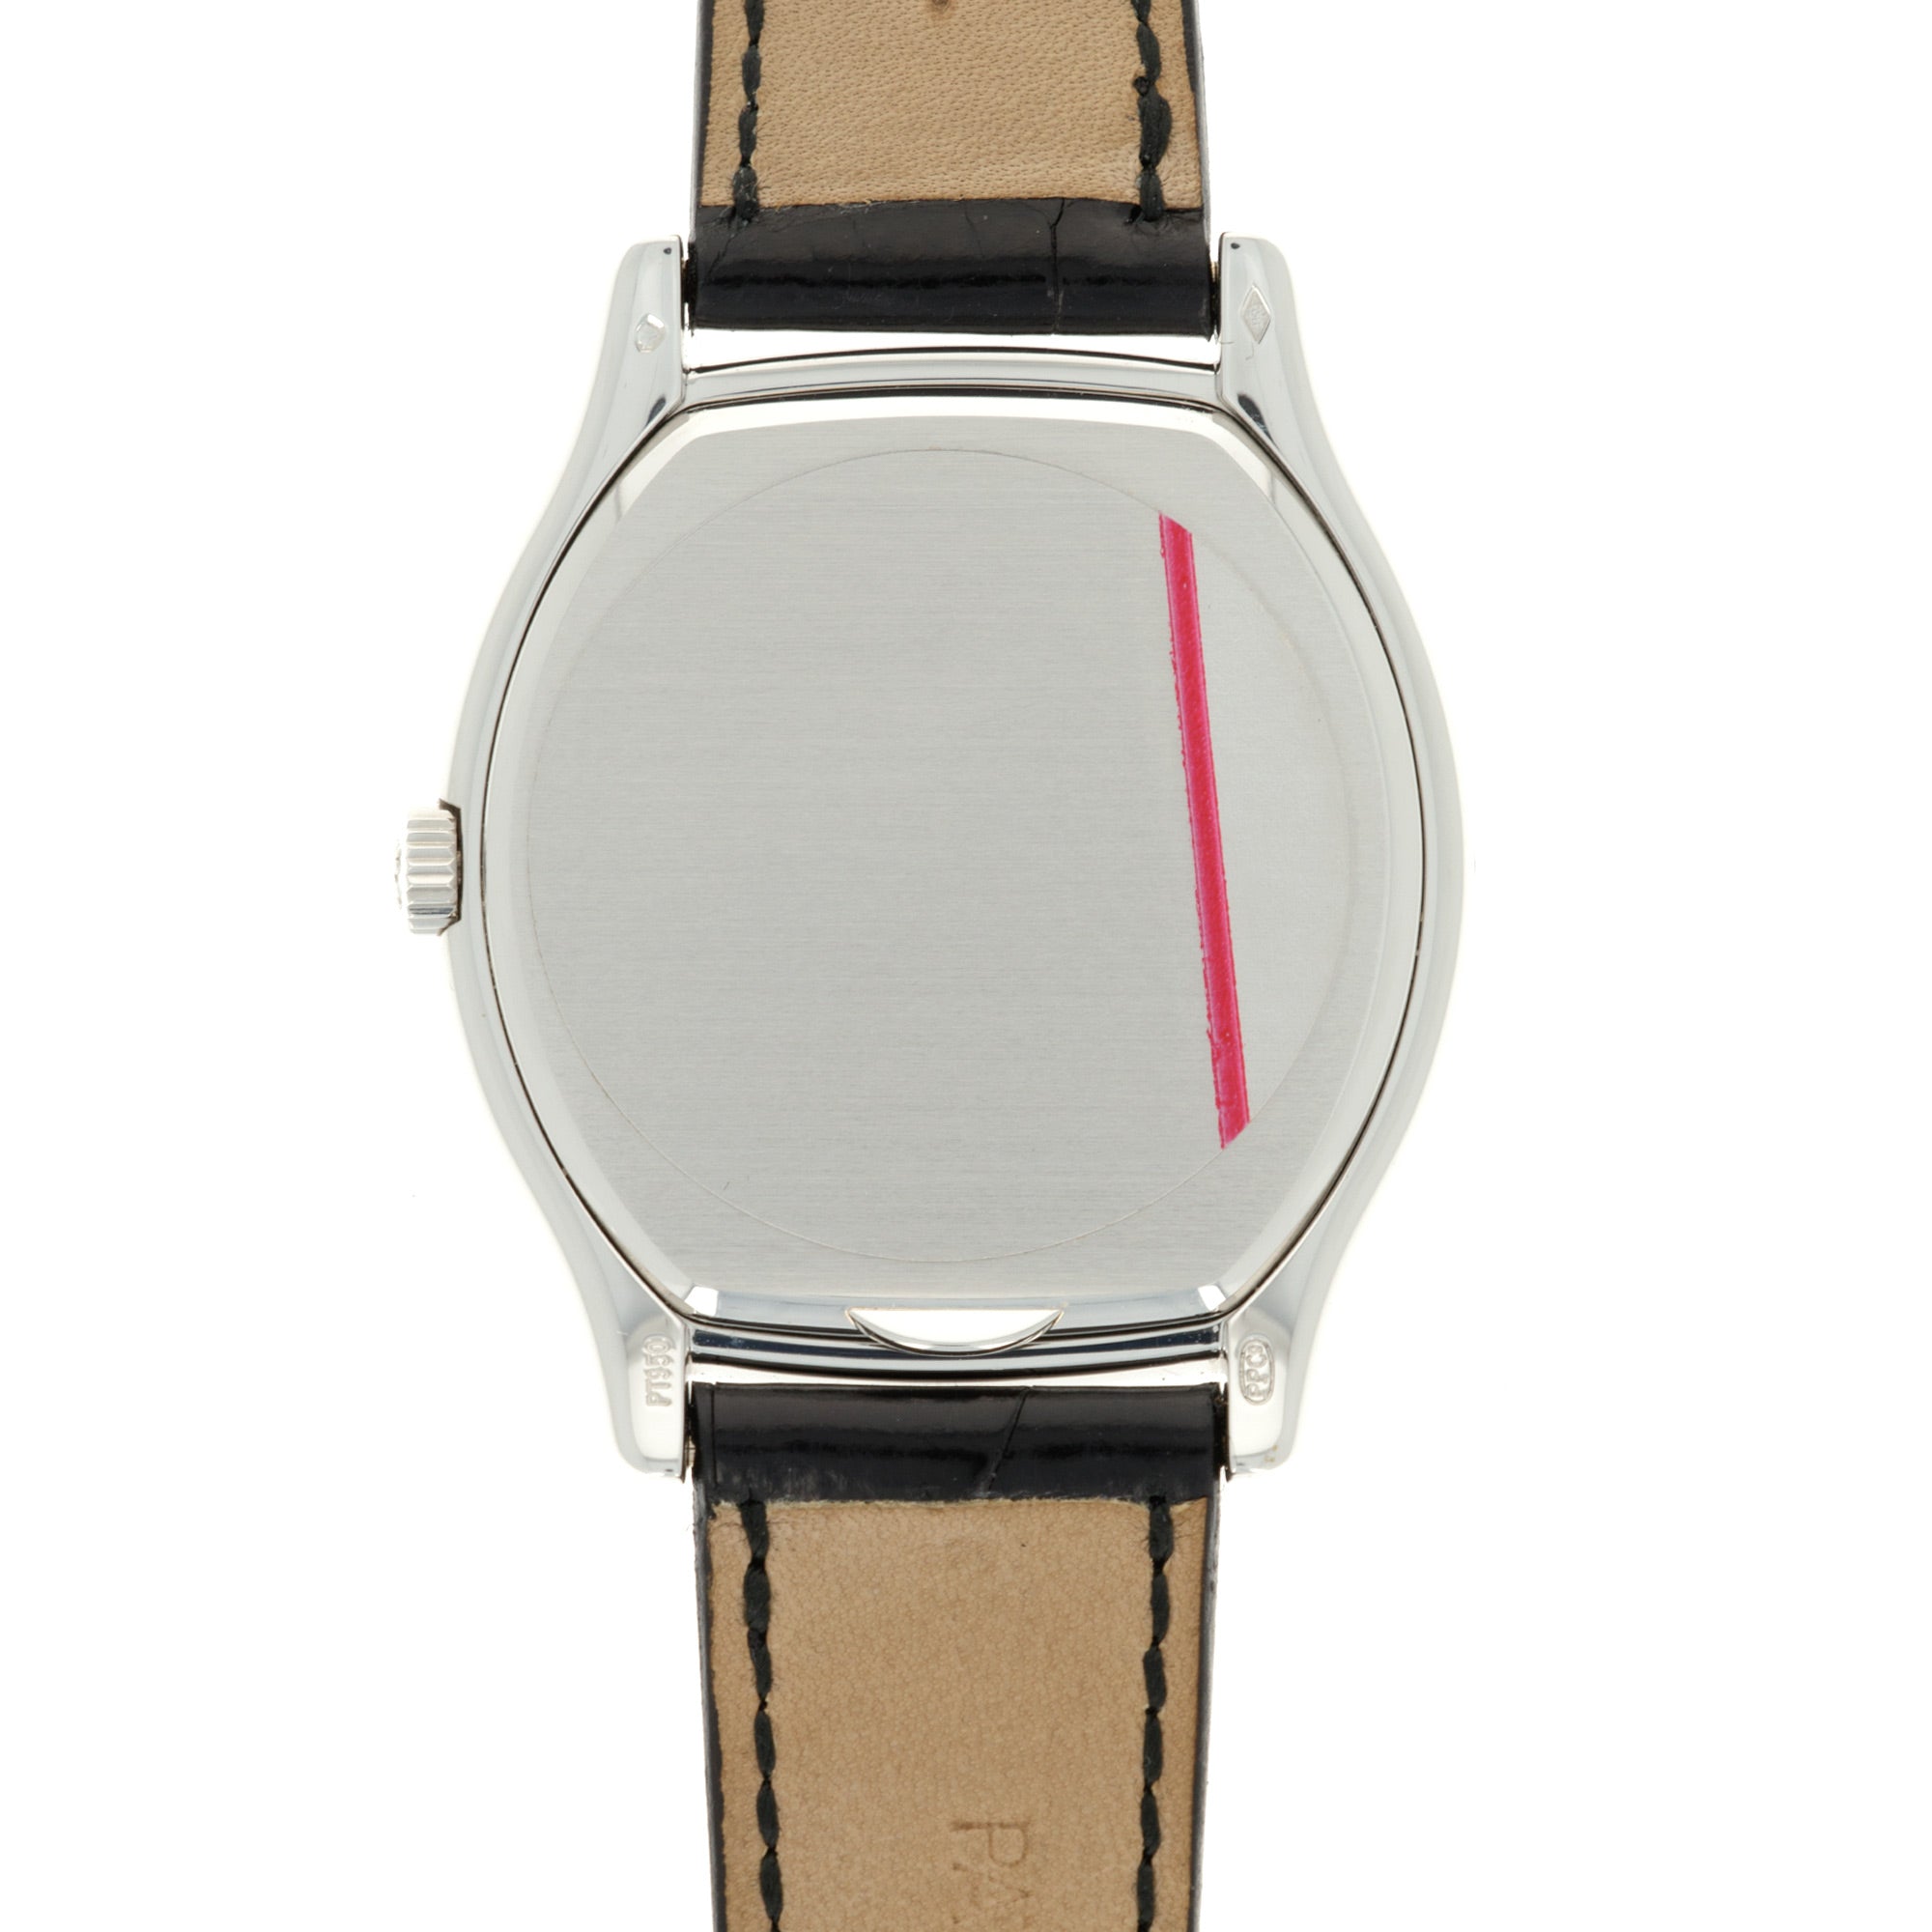 Patek Philippe - Patek Philippe Platinum Perpetual Calendar Watch Ref. 5040 - The Keystone Watches